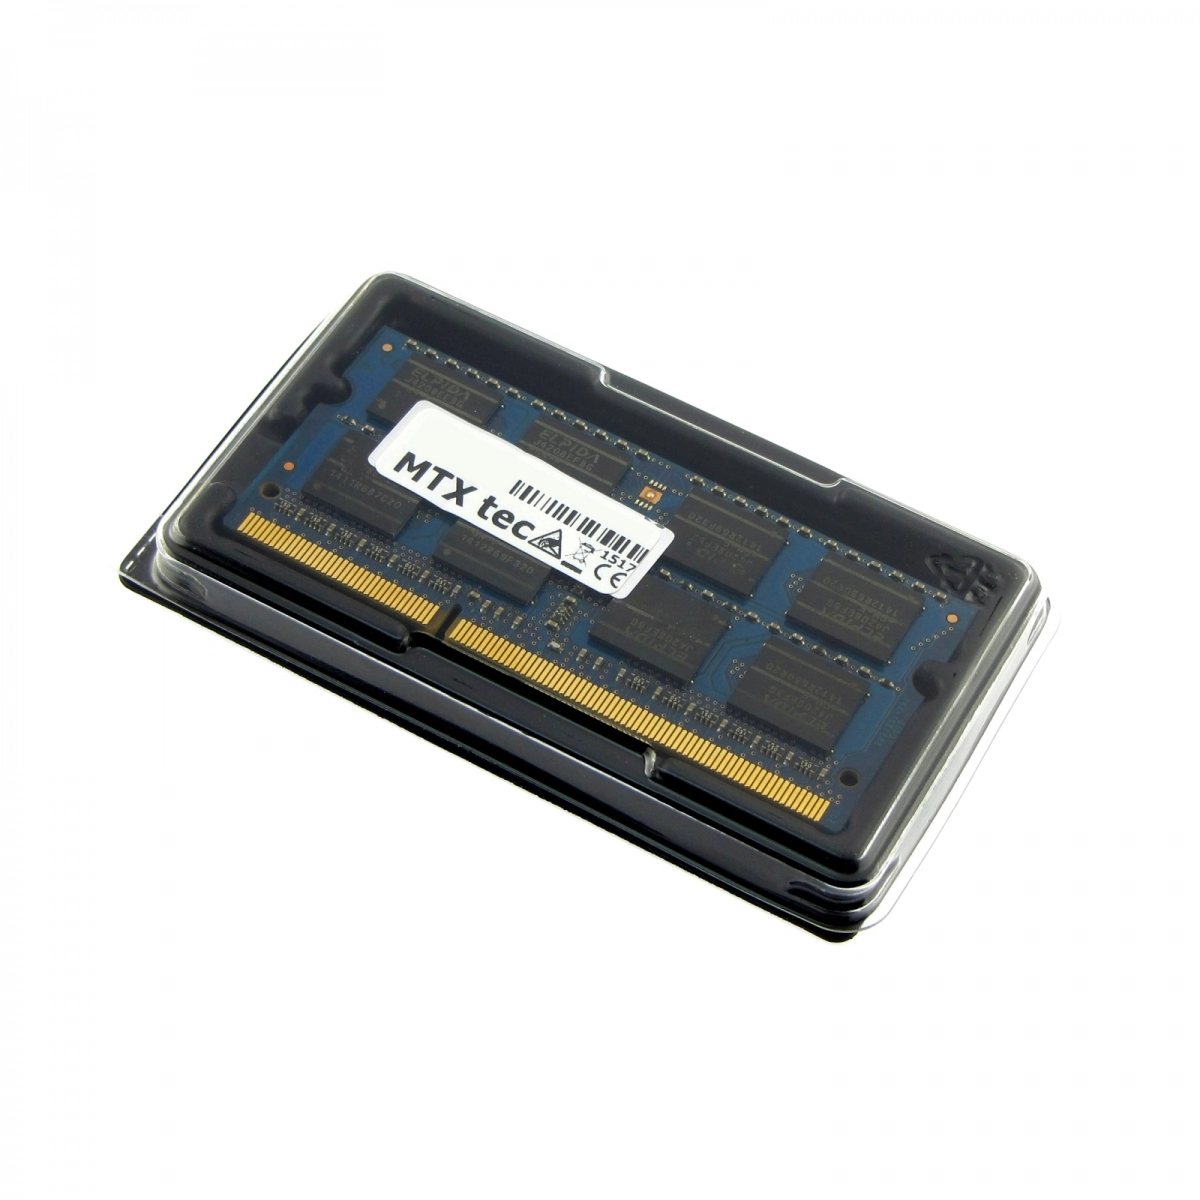 MTXtec Arbeitsspeicher 8 GB RAM für LENOVO ThinkPad T530 (2359)